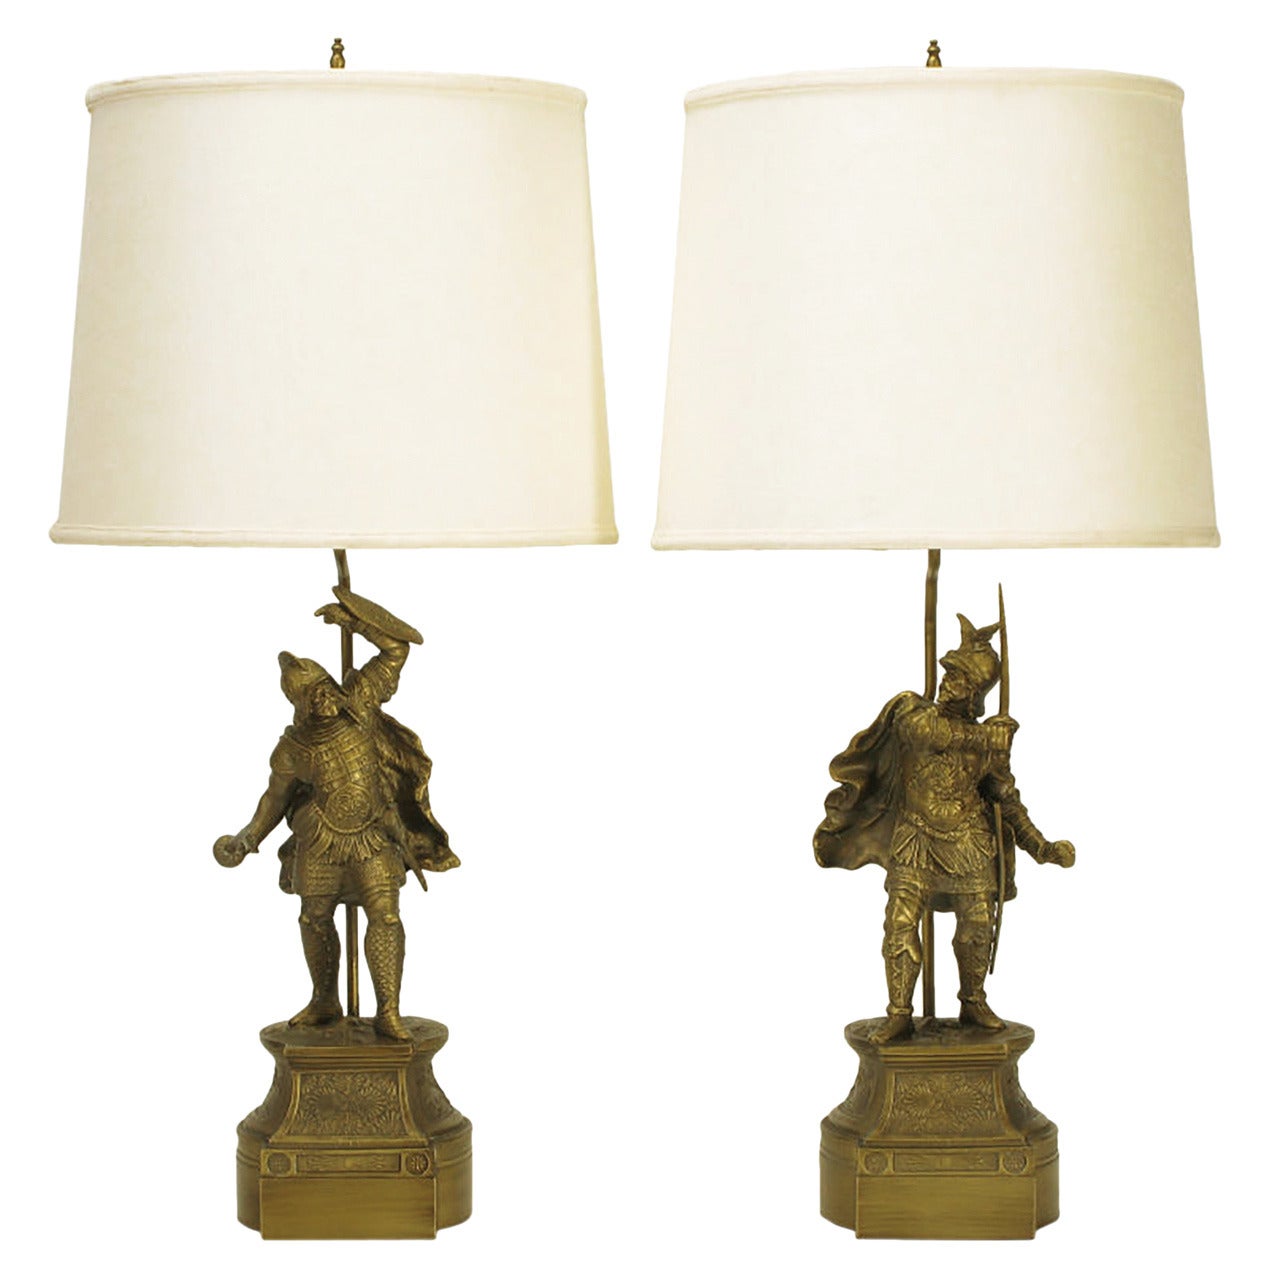 Pair of Brass Conquistador Figure Table Lamps